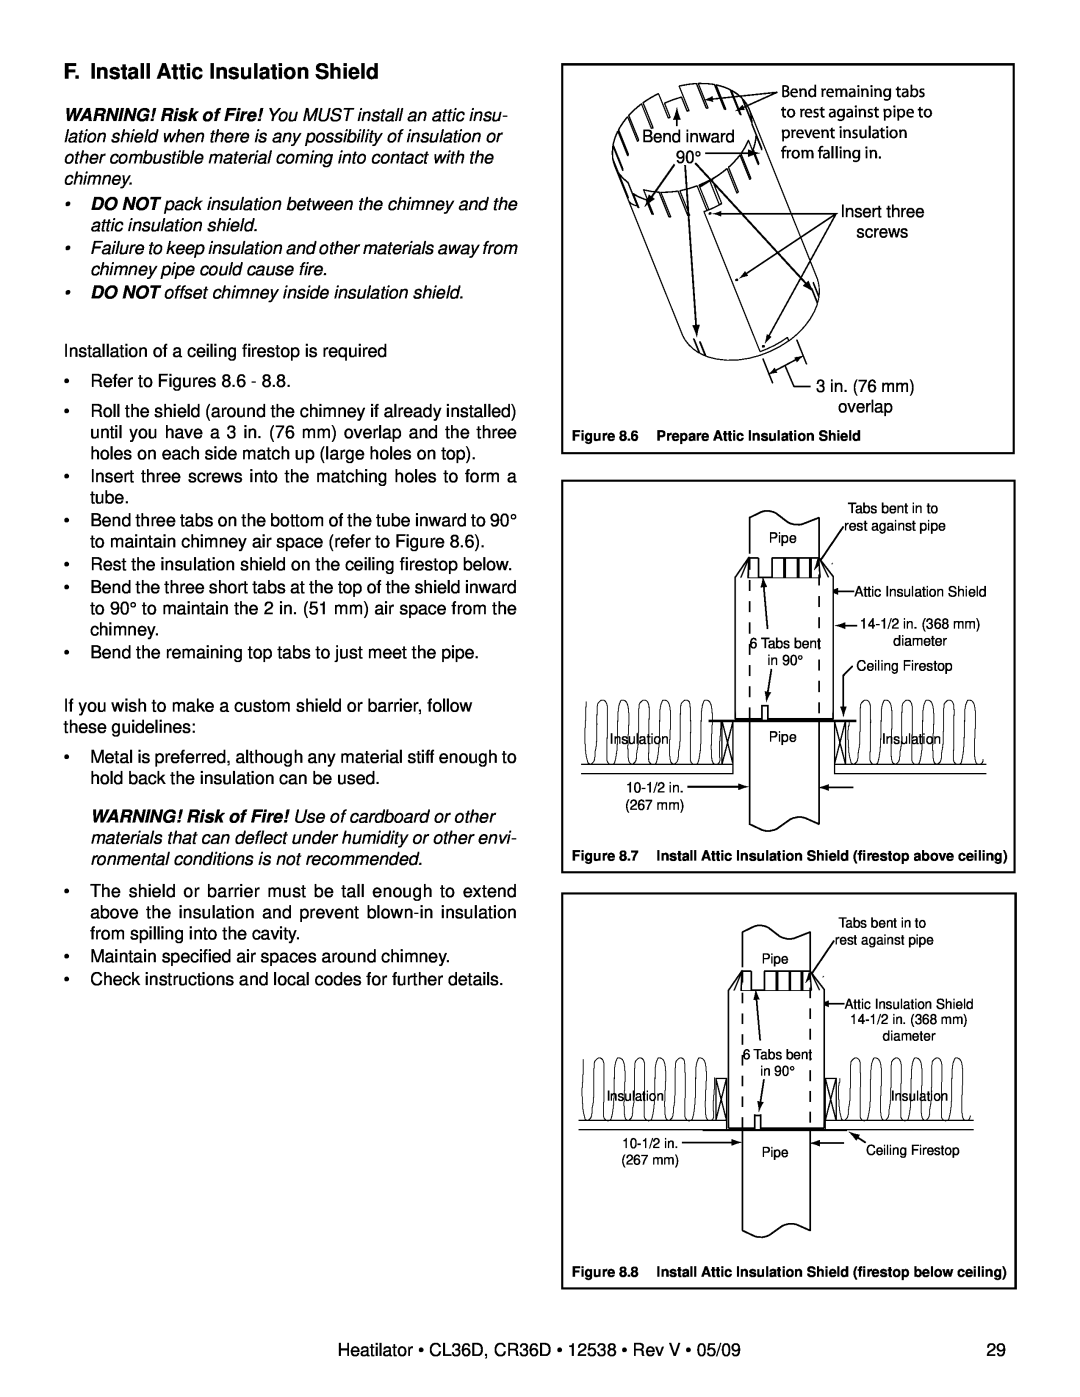 Heatiator CL36D, CR36D owner manual F. Install Attic Insulation Shield 